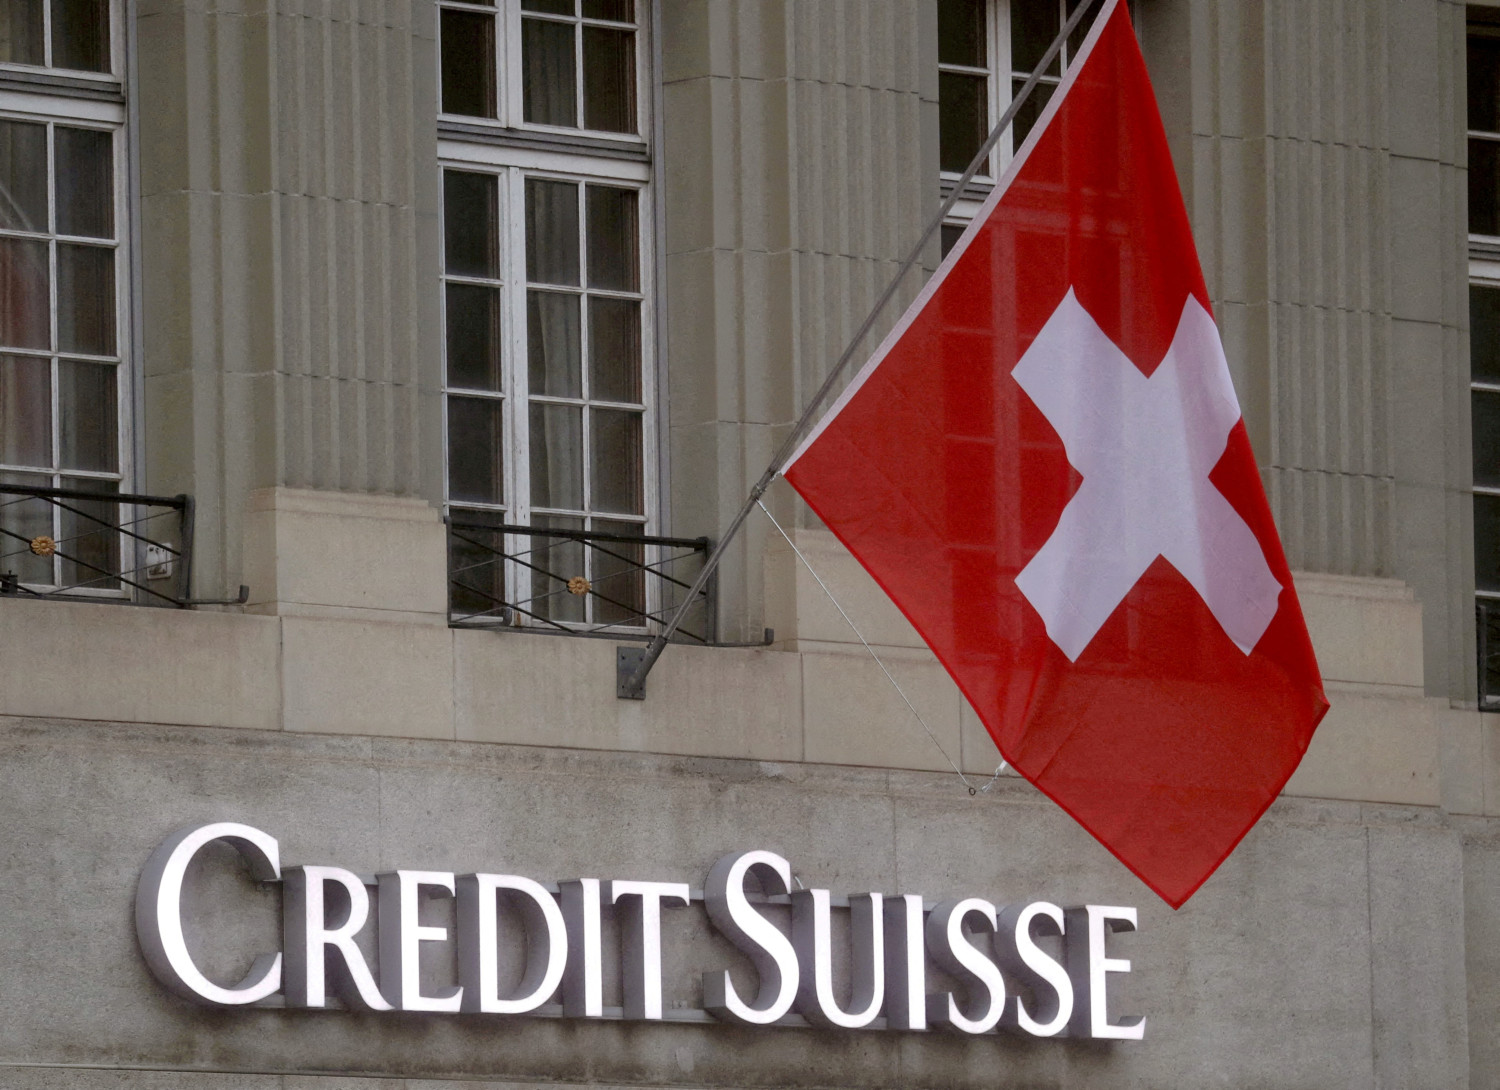 UBS negocia la compra de Credit Suisse